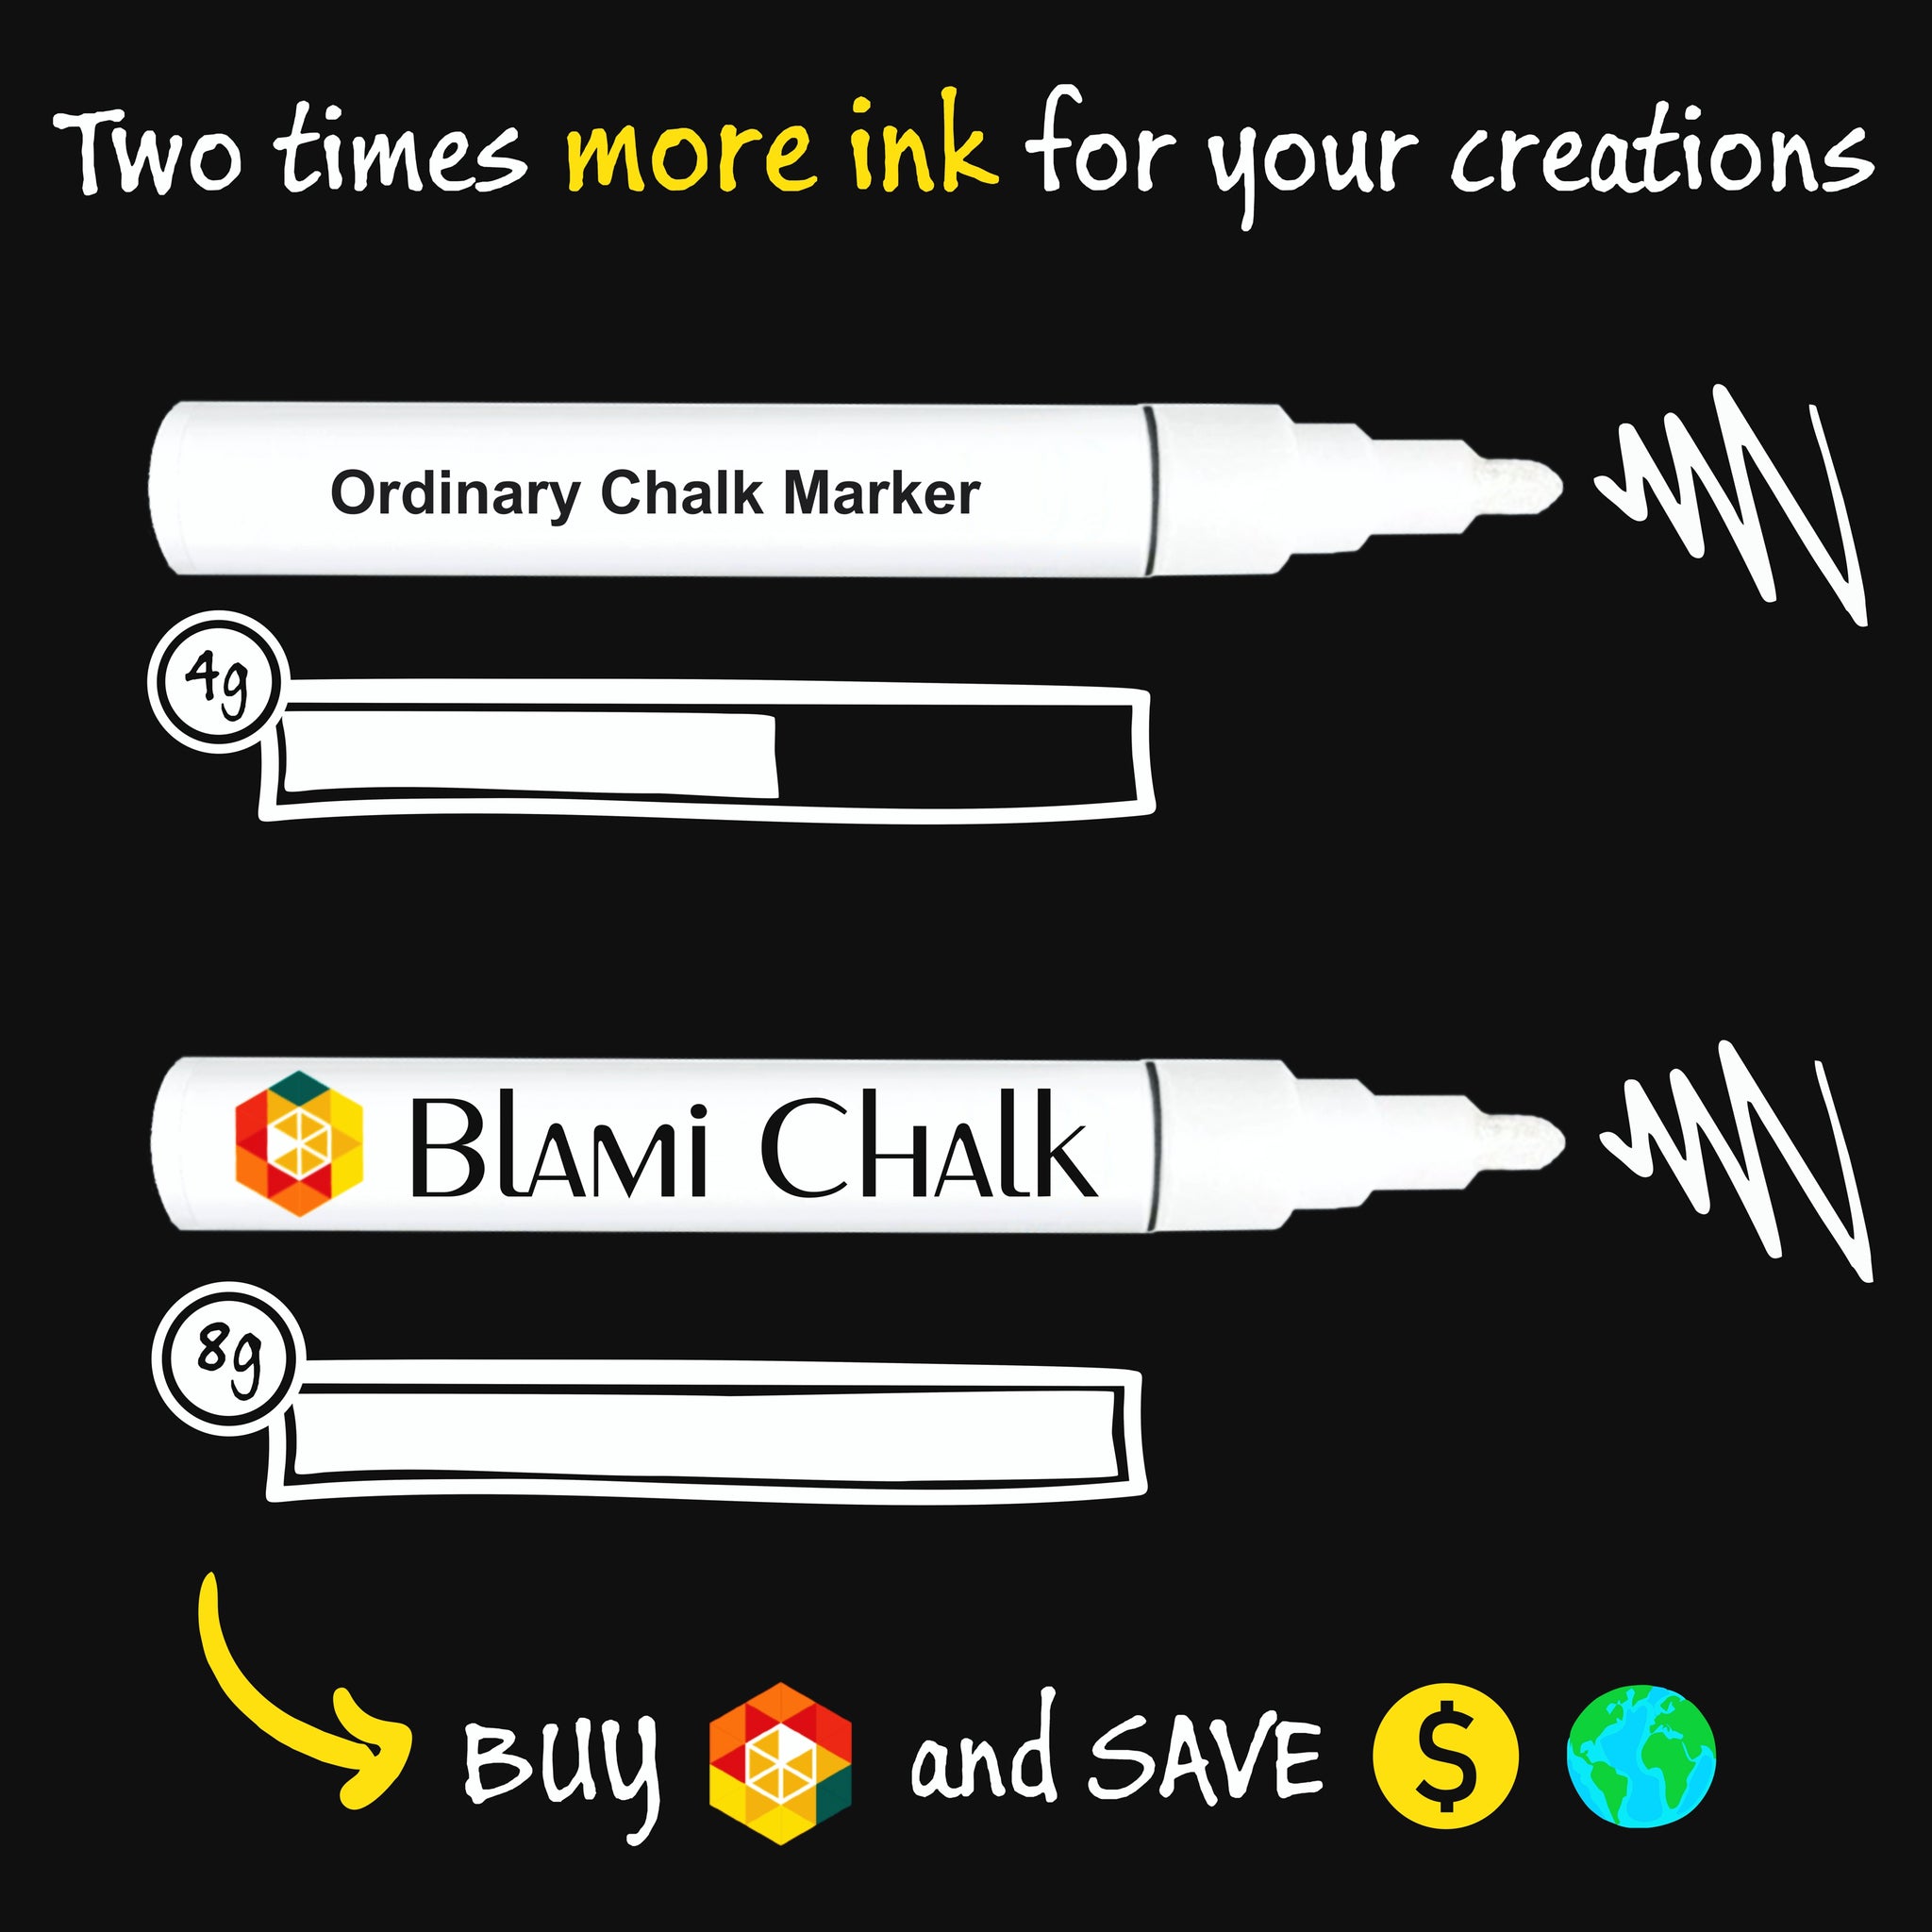 Blami Arts White Sidewalk Chalk Markers 4 Pack - Reversible Fine